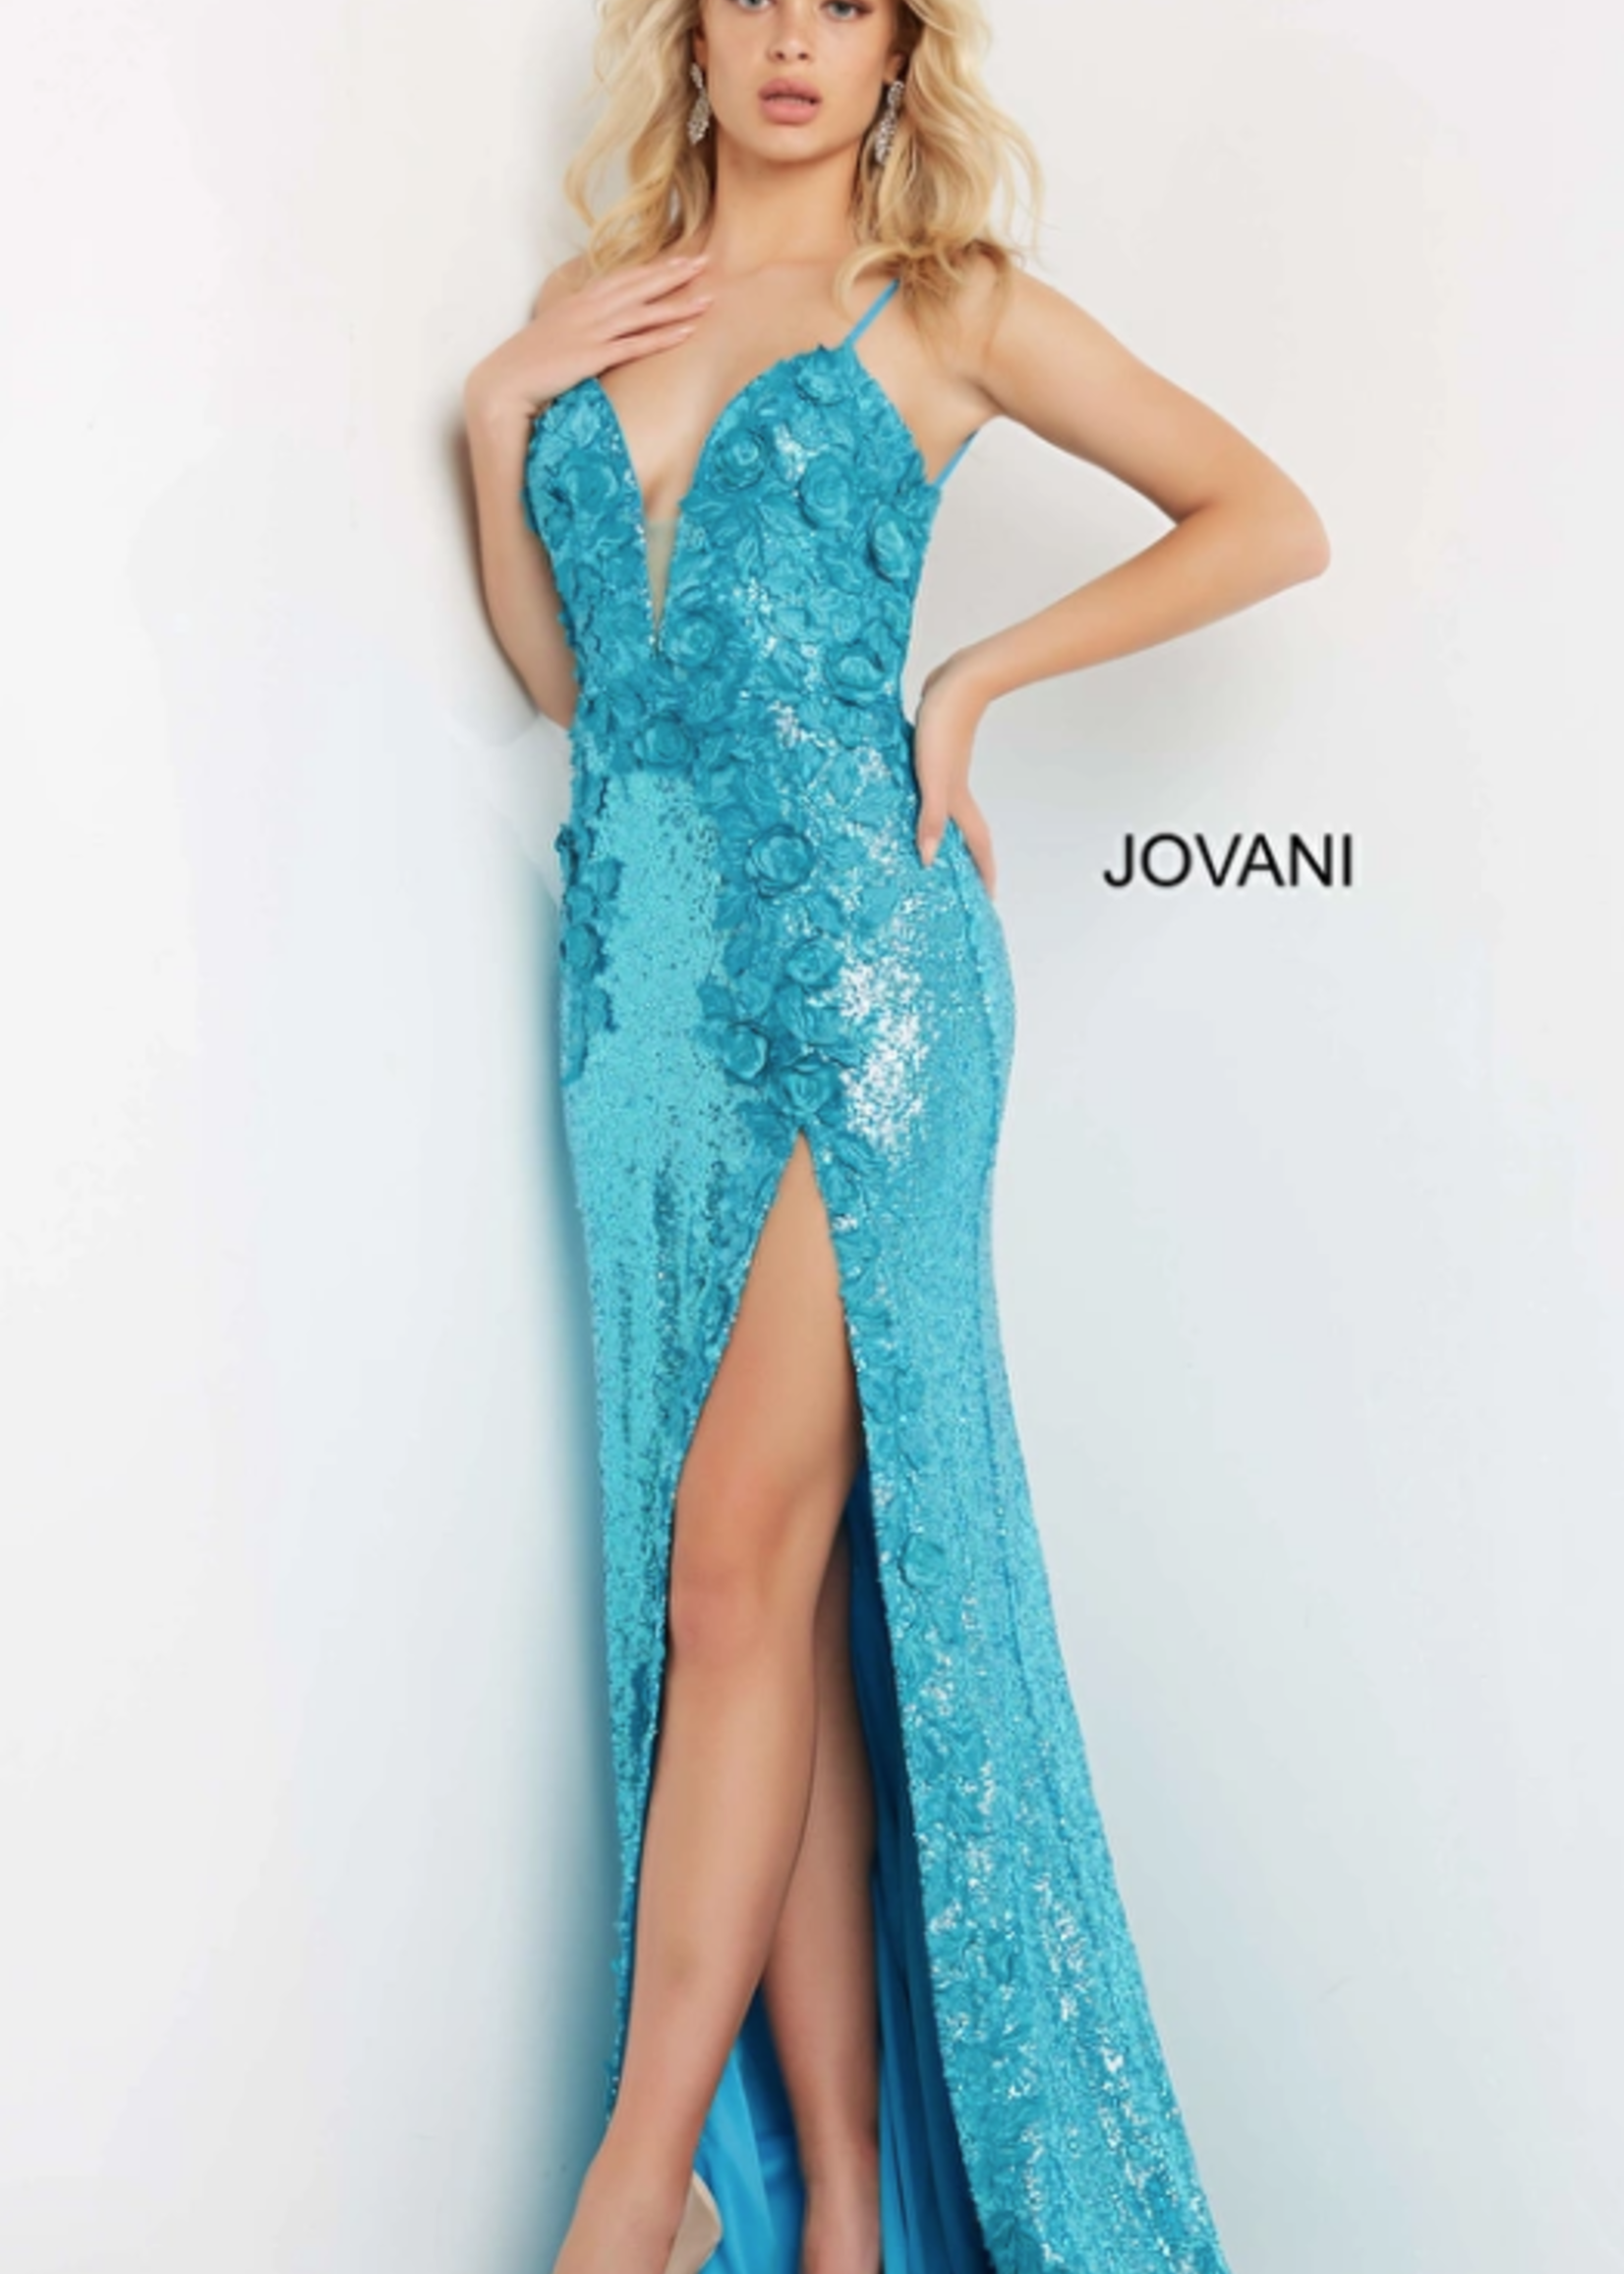 Jovani Always Magical Dress (4 colors) - Cousin Couture